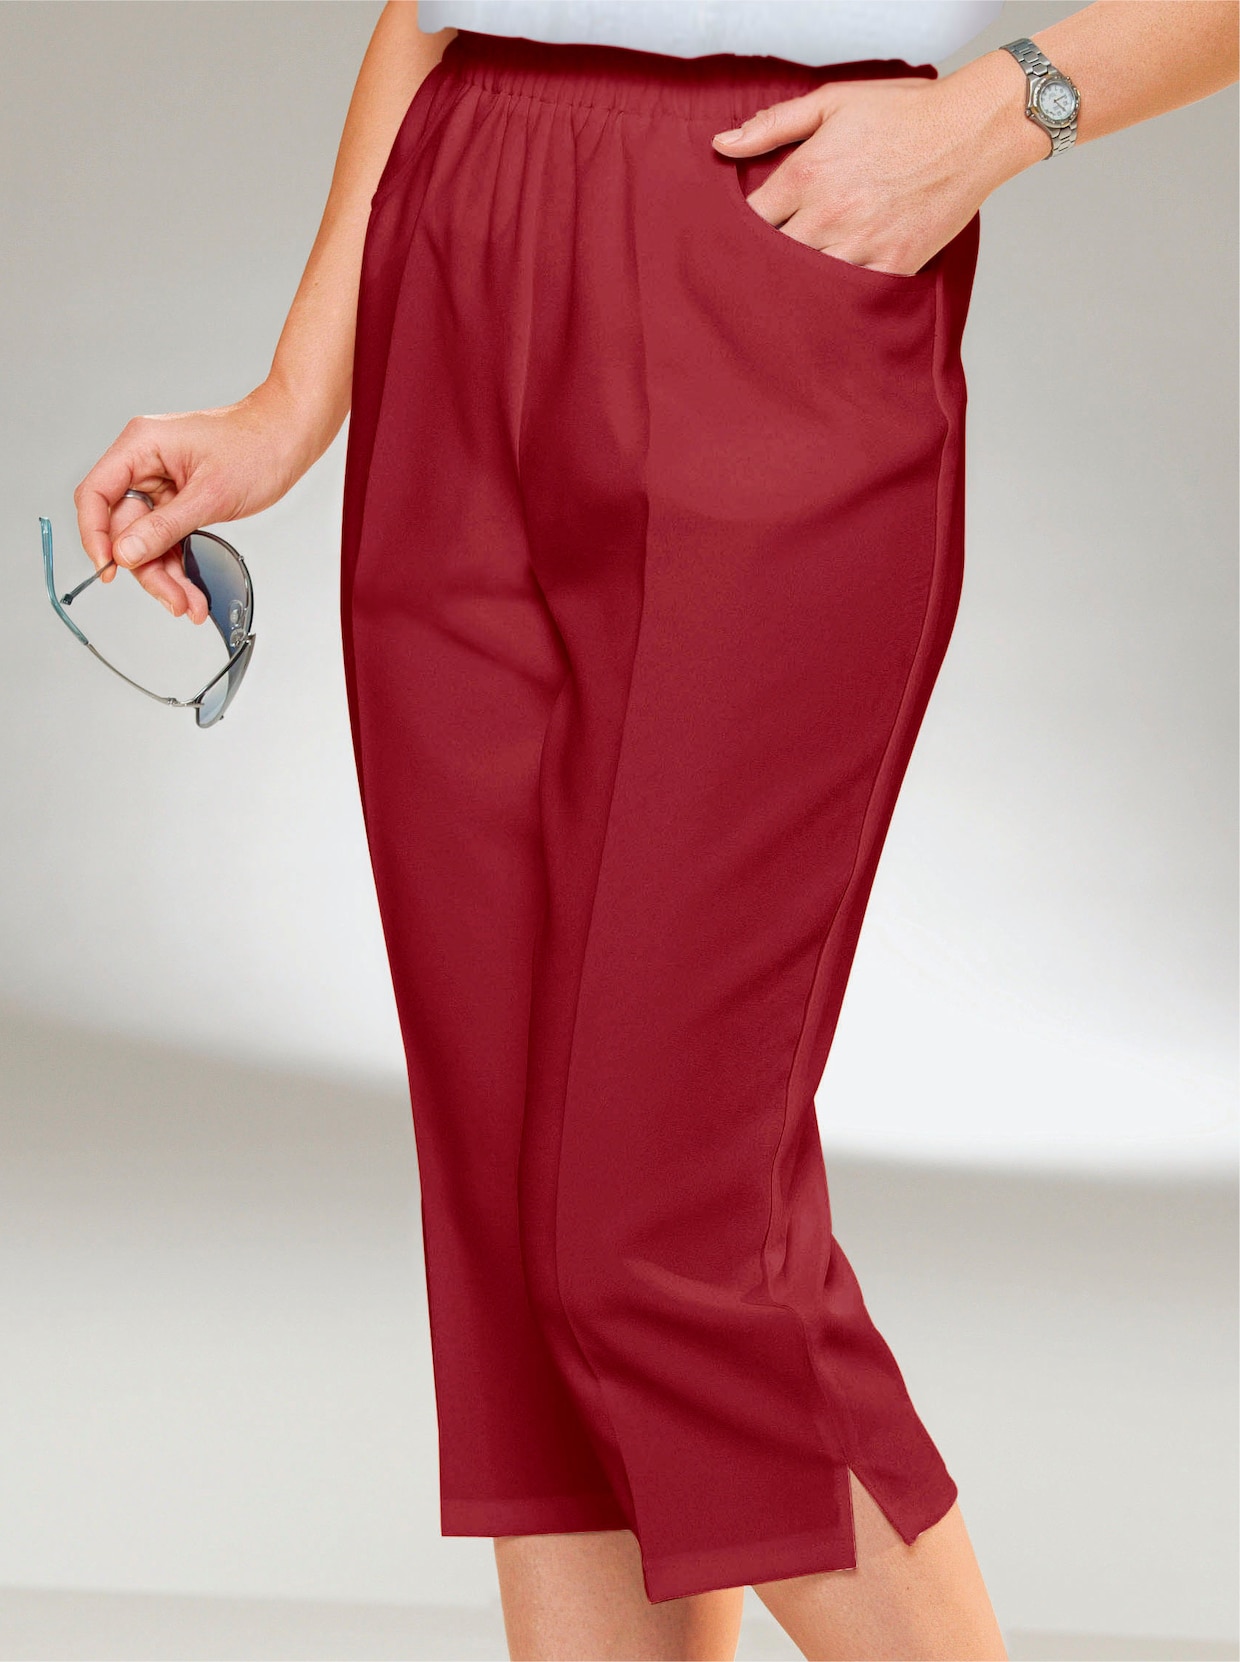 Capri nohavice - červená